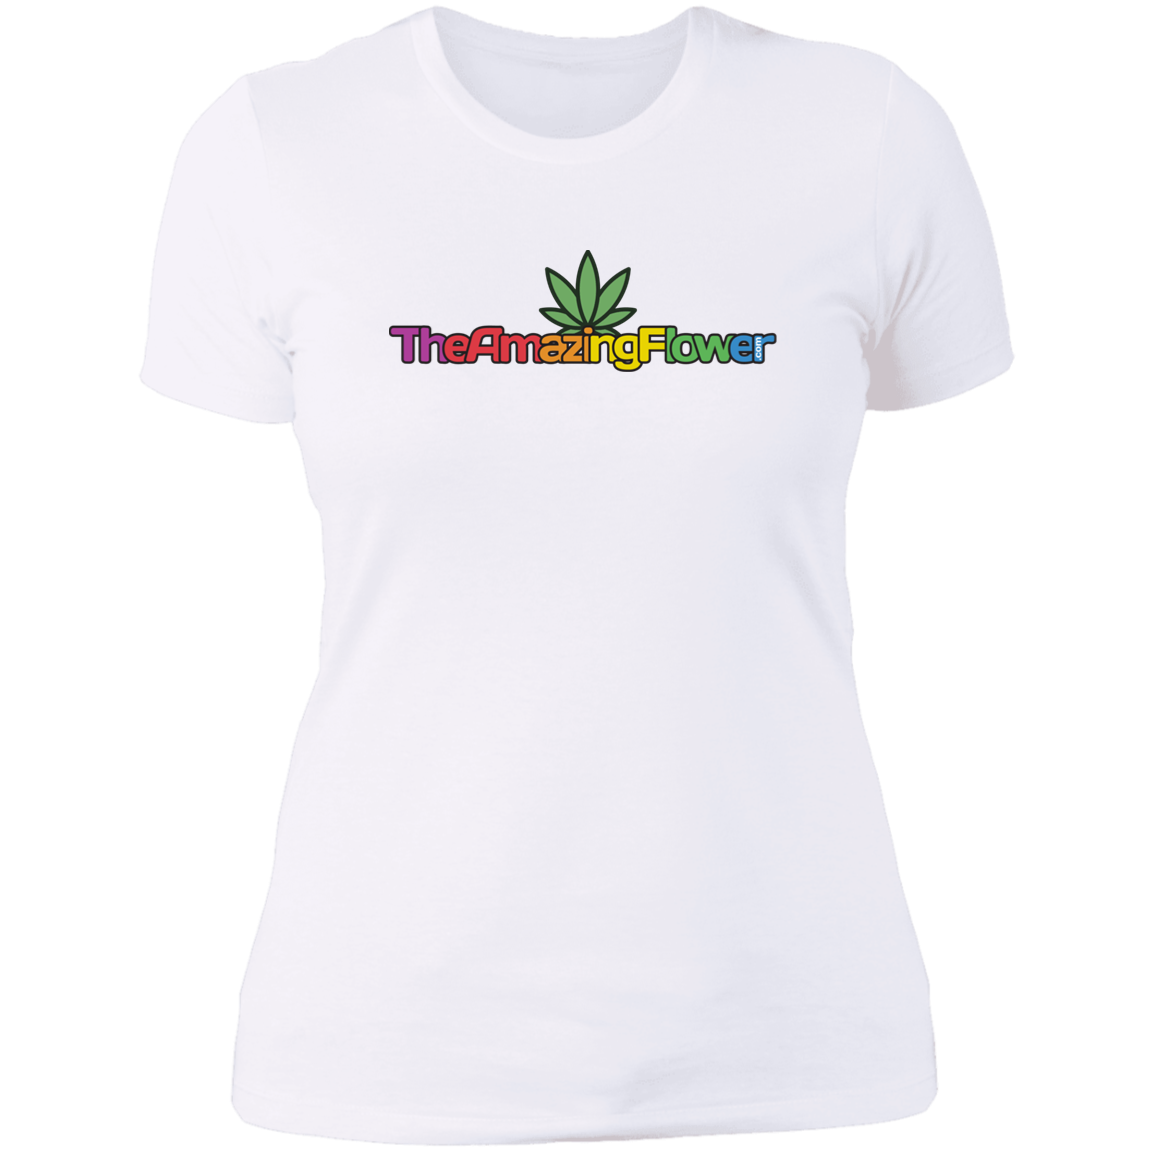 Hemp Leaf Logo Women's T-Shirt from TheAmazingFlower.com (White)